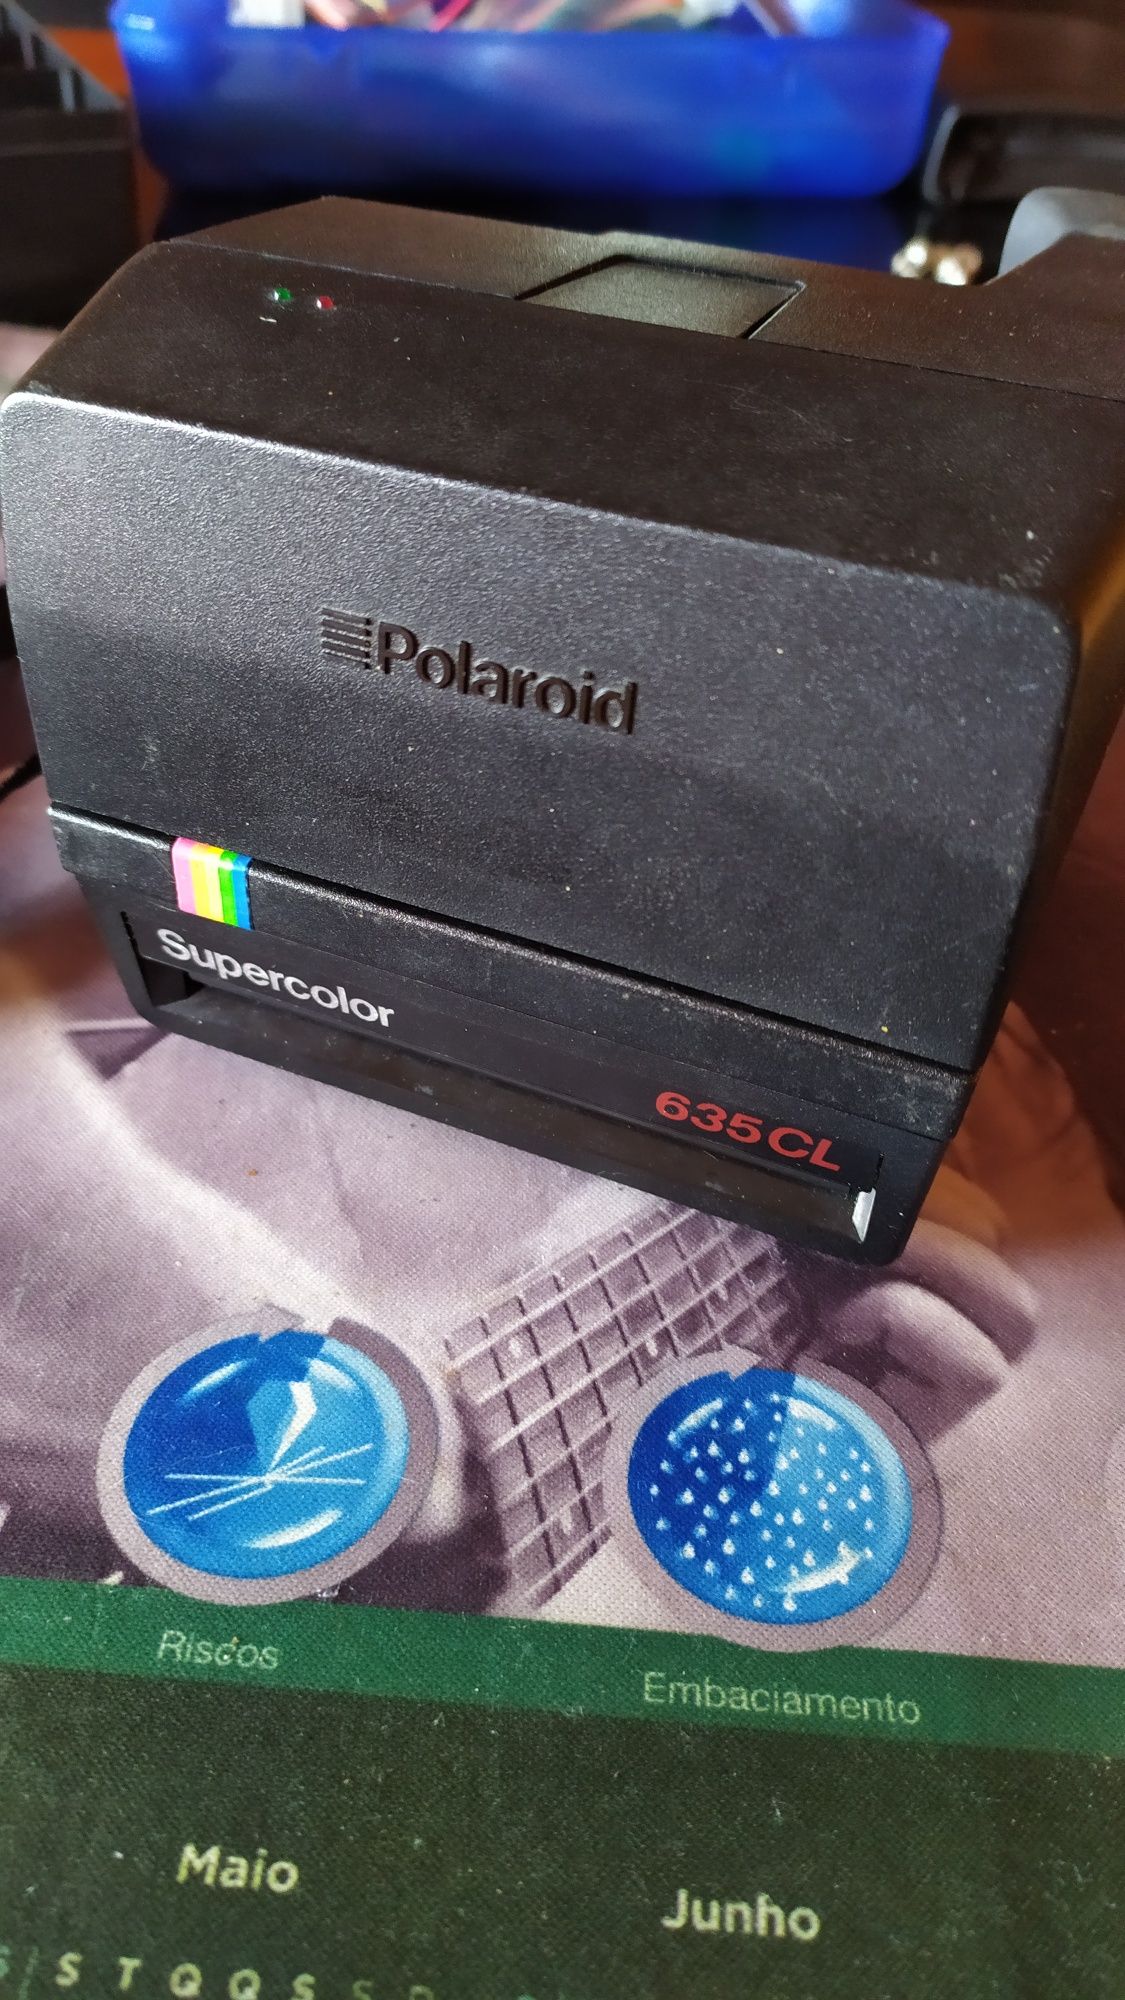 Polaroid Supercolor 635CL,